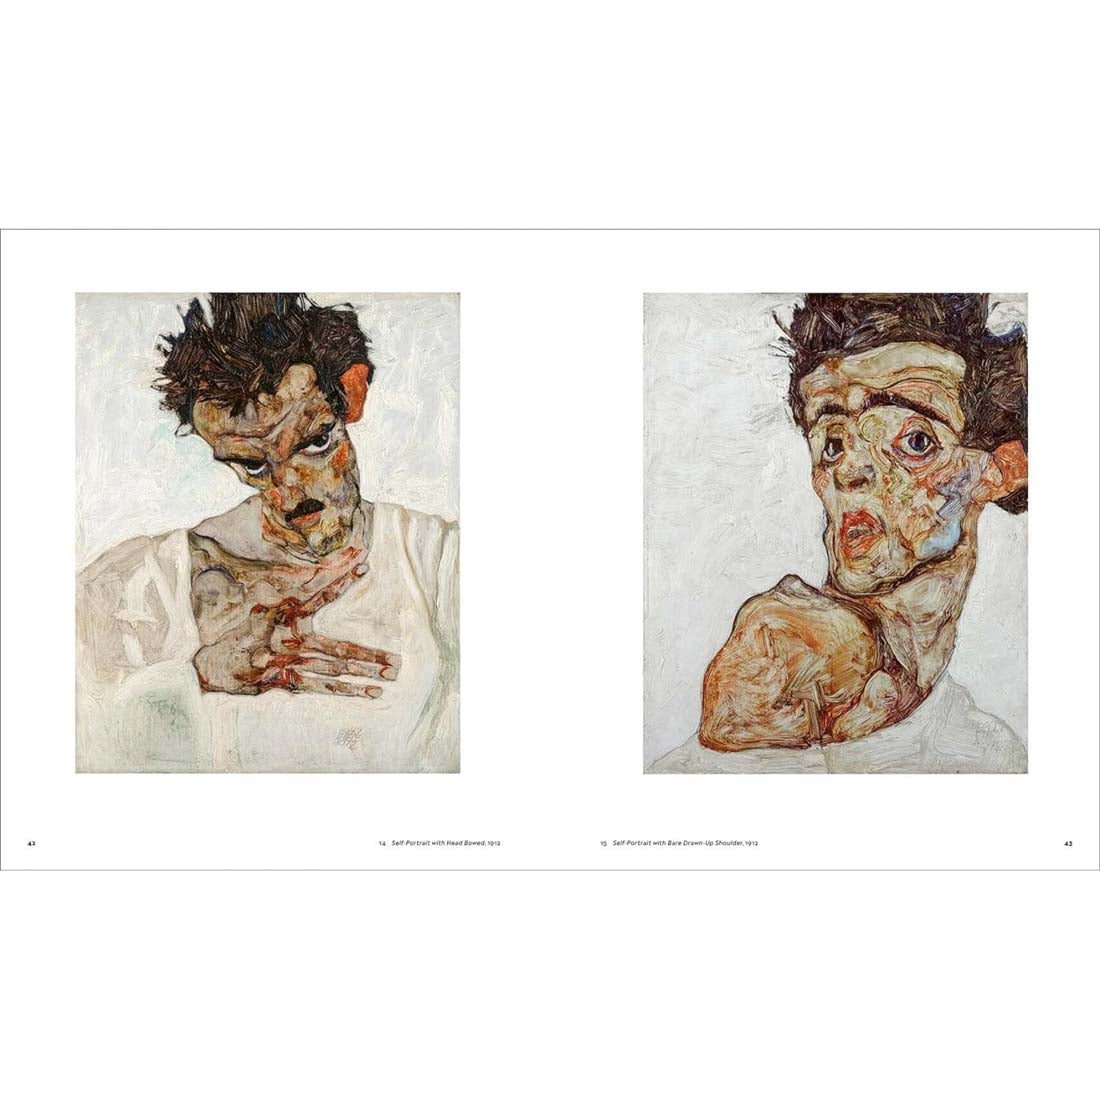 The Faces of Egon Schiele: Self-Portraits